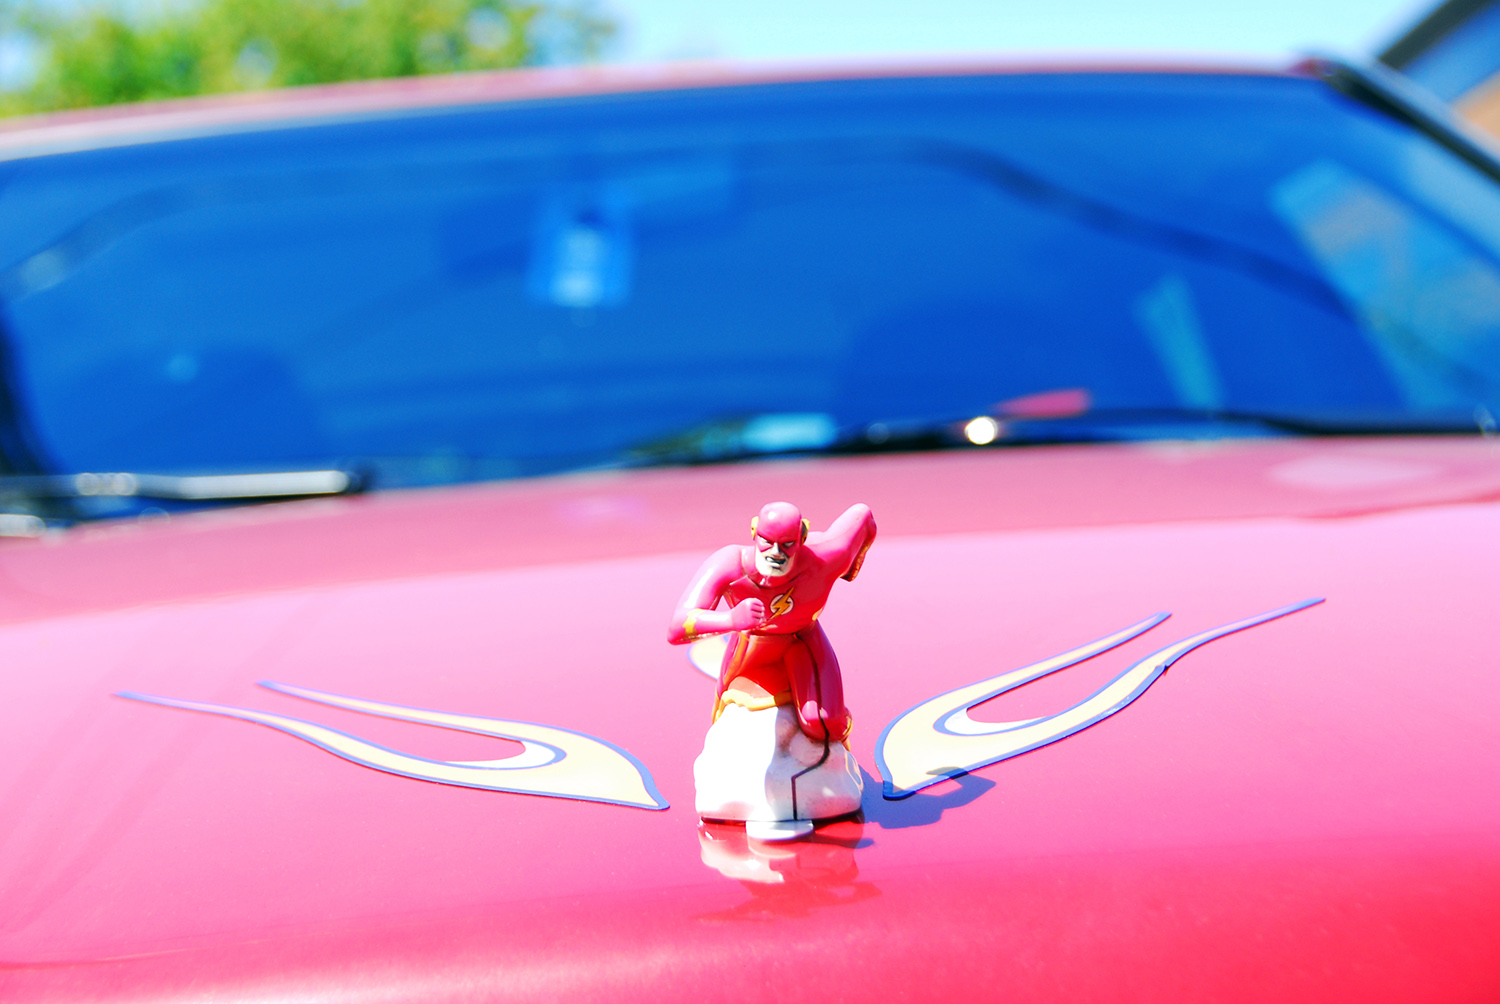 The_Flash_Hood_Ornament_Pink_Car_Blue_Windshield.jpg